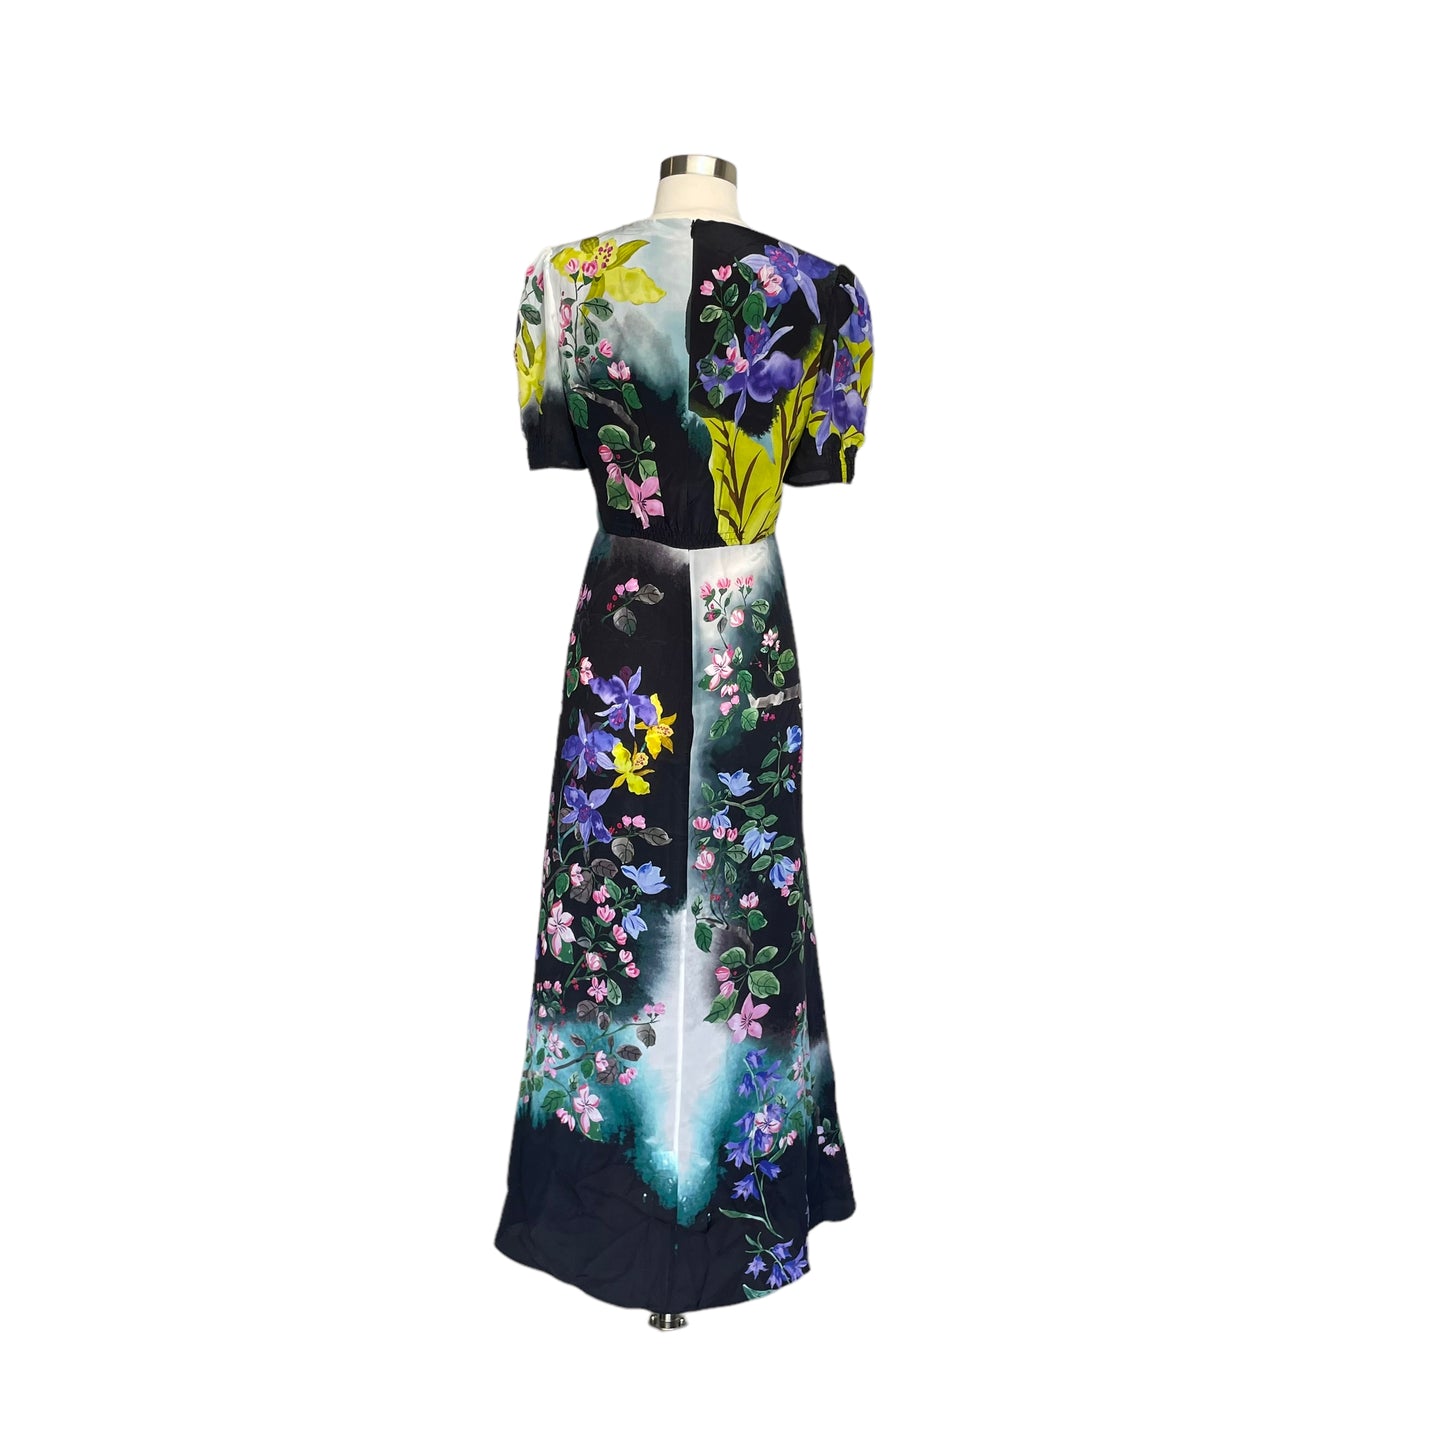 Tropic Florals Dress - S/M